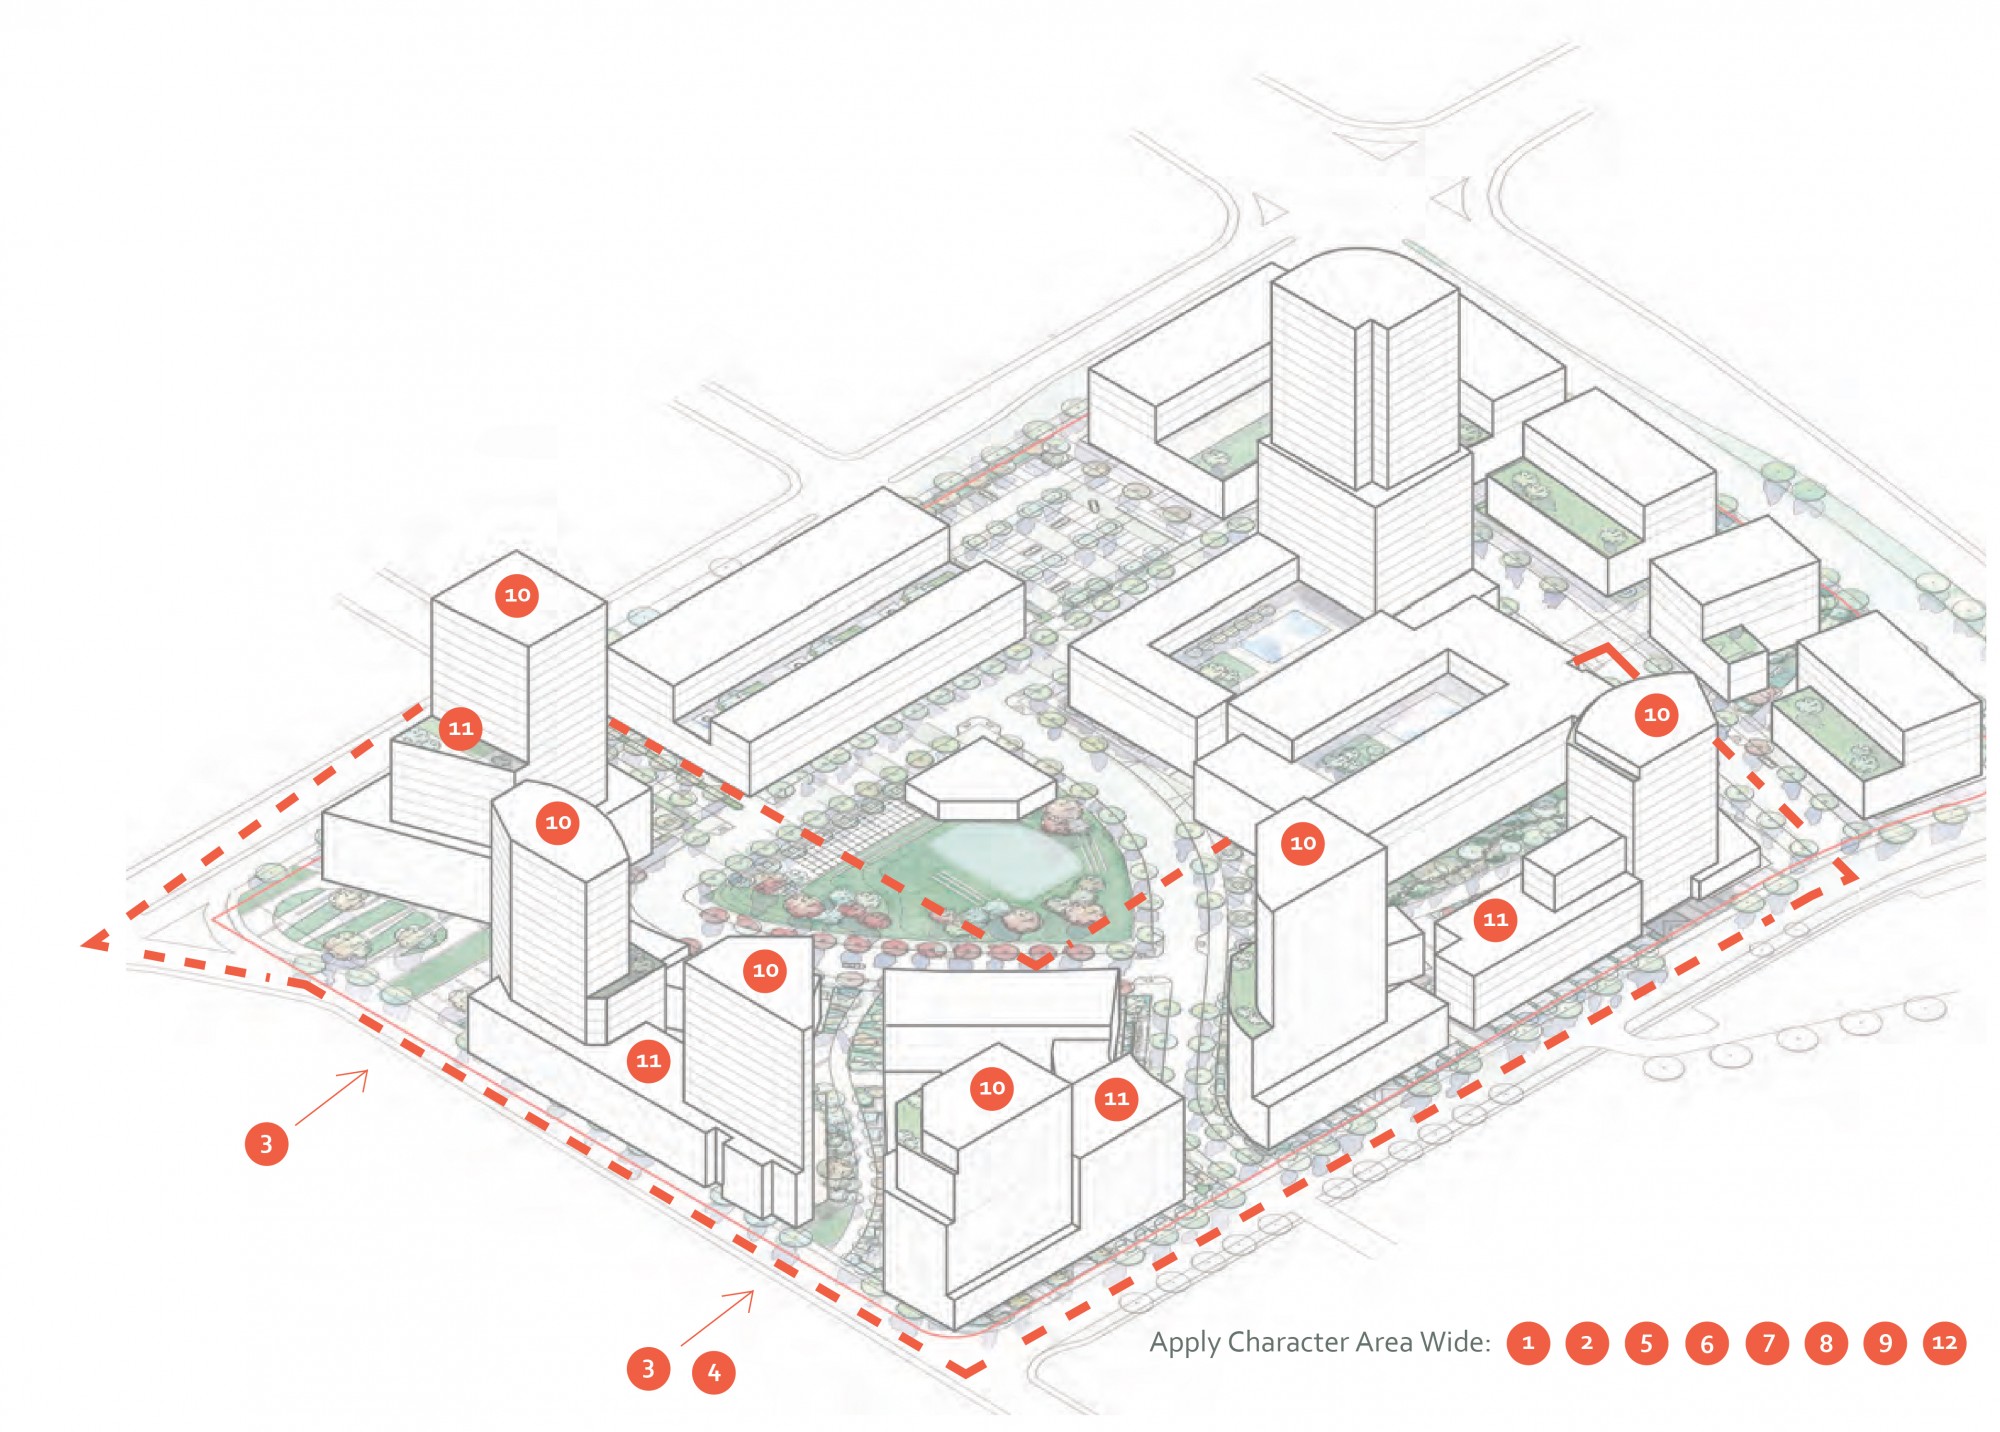 2040 OCP - Comprehensive Zone 26 - diagram of residential focus area in Capri Landmark zone